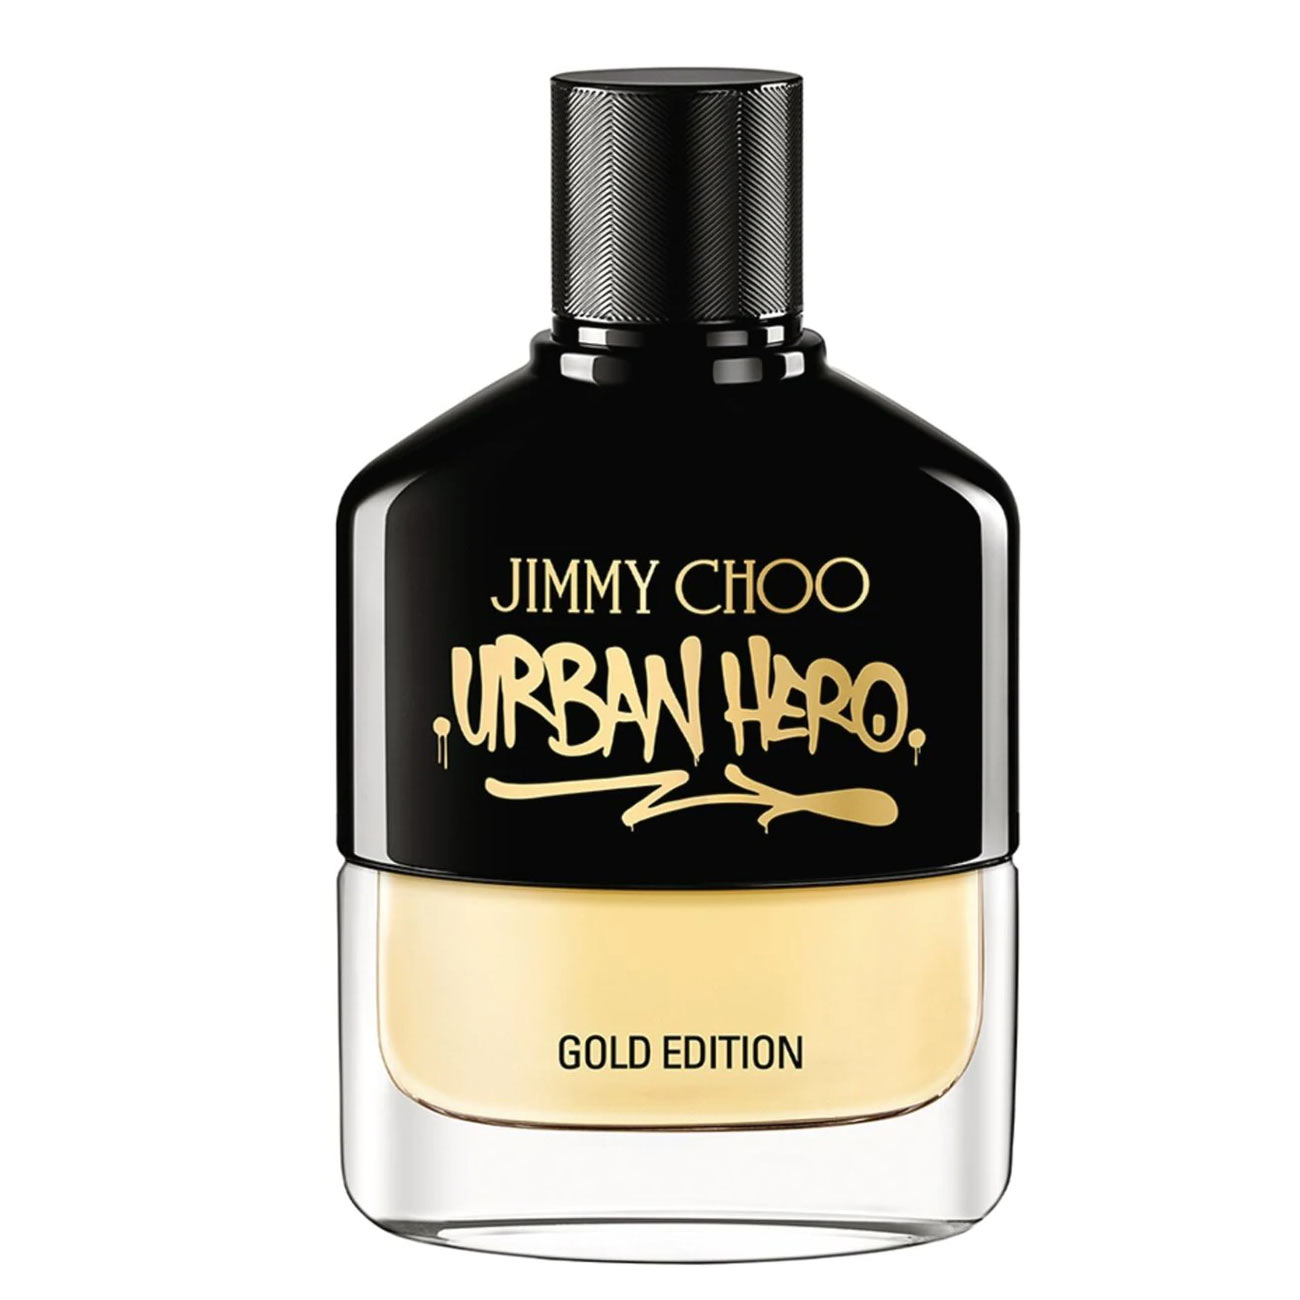 Urban-Hero-Gold-Edition-Jimmy-Choo